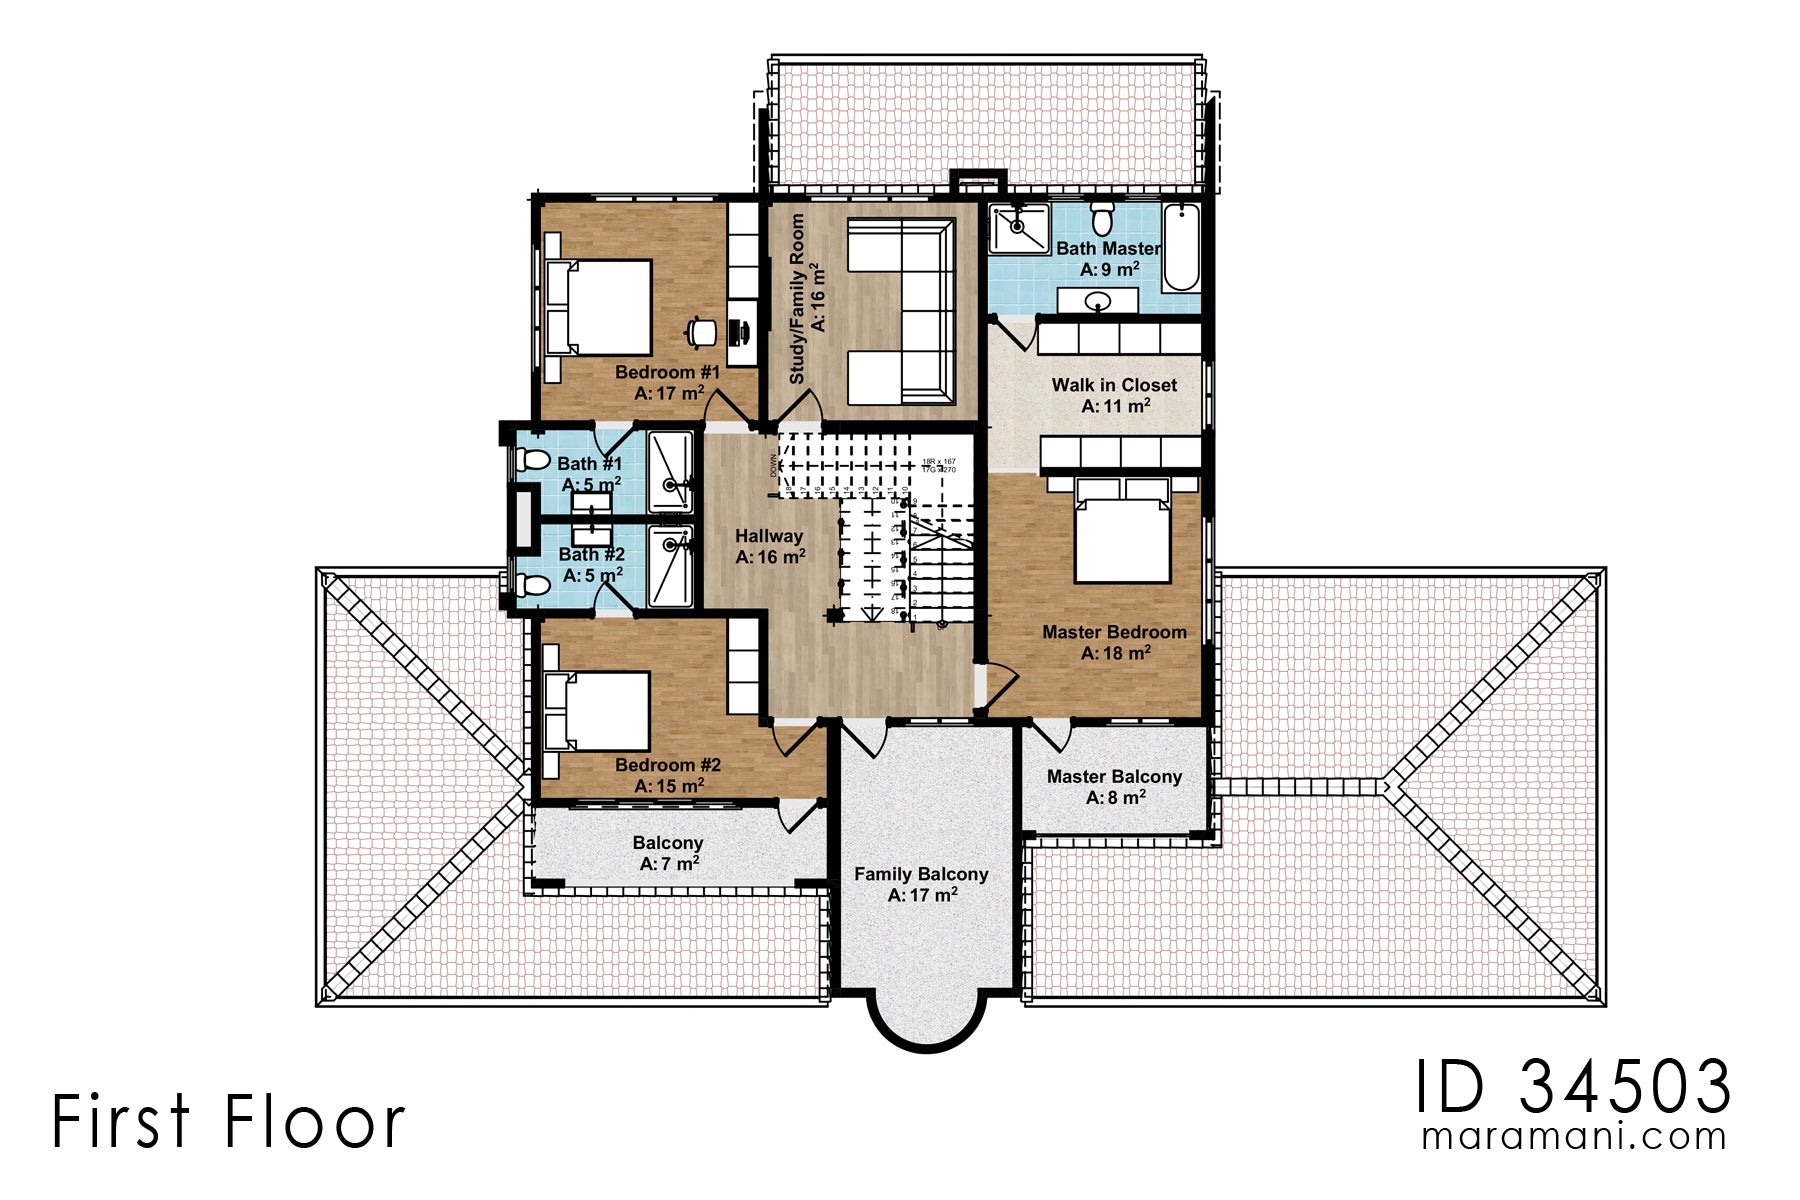 4 Bedroom modern house design - ID 34503